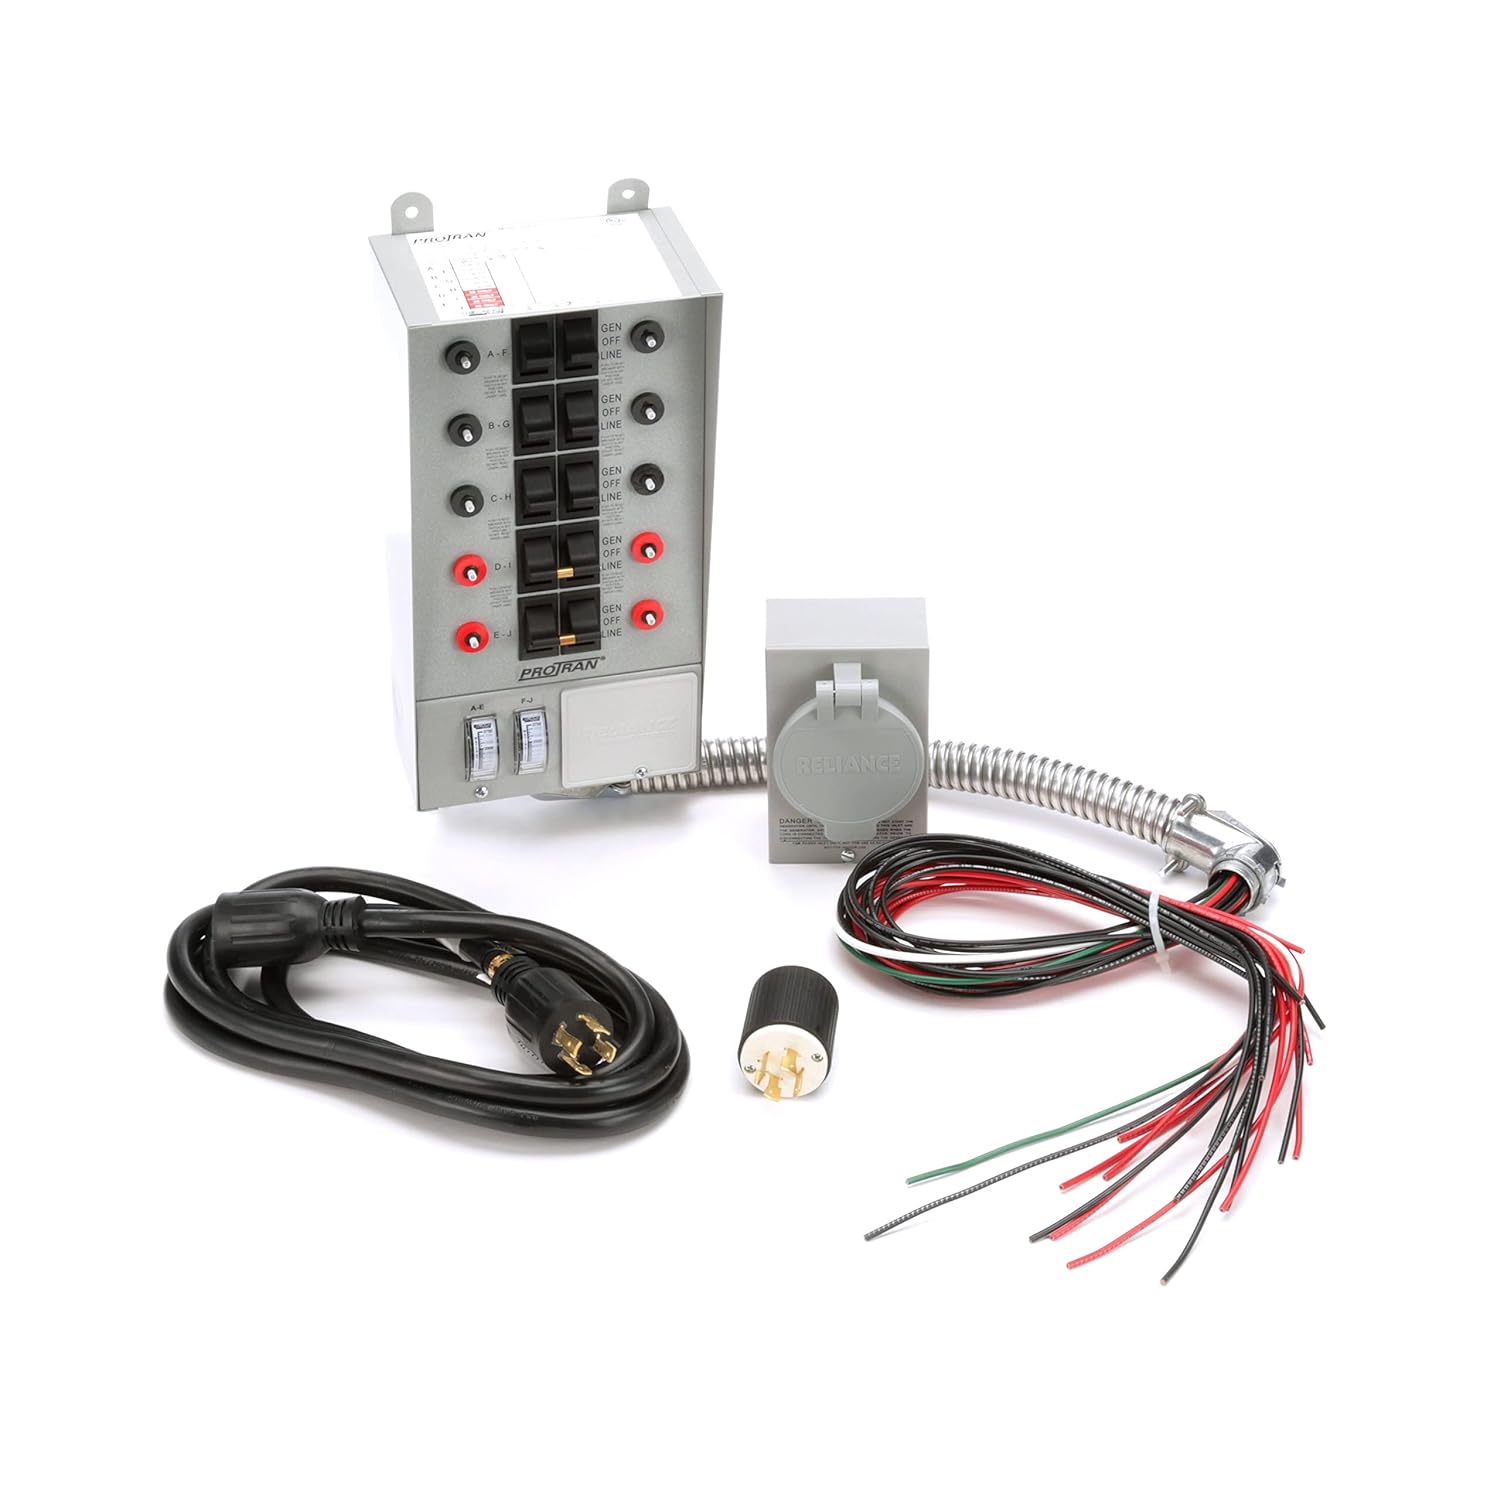 Reliance Controls 31410CRK Pro/Tran 10-Circuit 30 Amp Generator Transfer Switch Kit,Gray - Reliance Controls Transfer Switch Kit Review